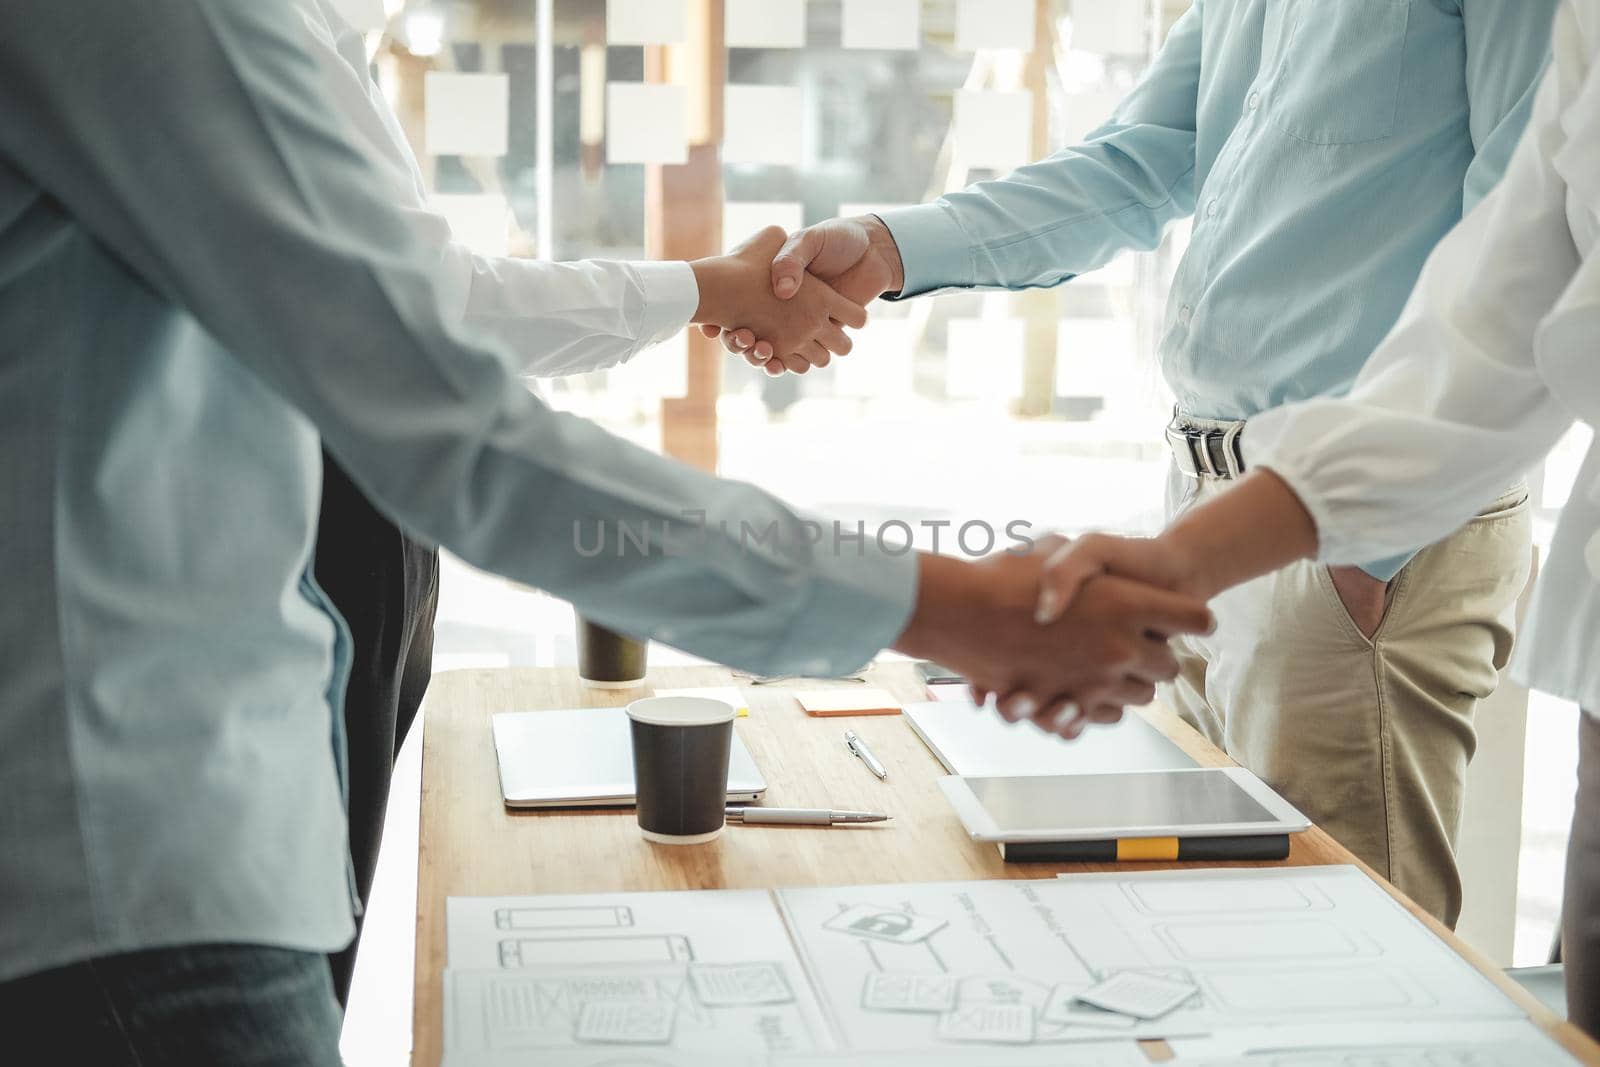 businessman shaking hands with businesswoman after UI UX desiner meeting. Business people handshaking. Greeting deal, teamwork partnership concept.